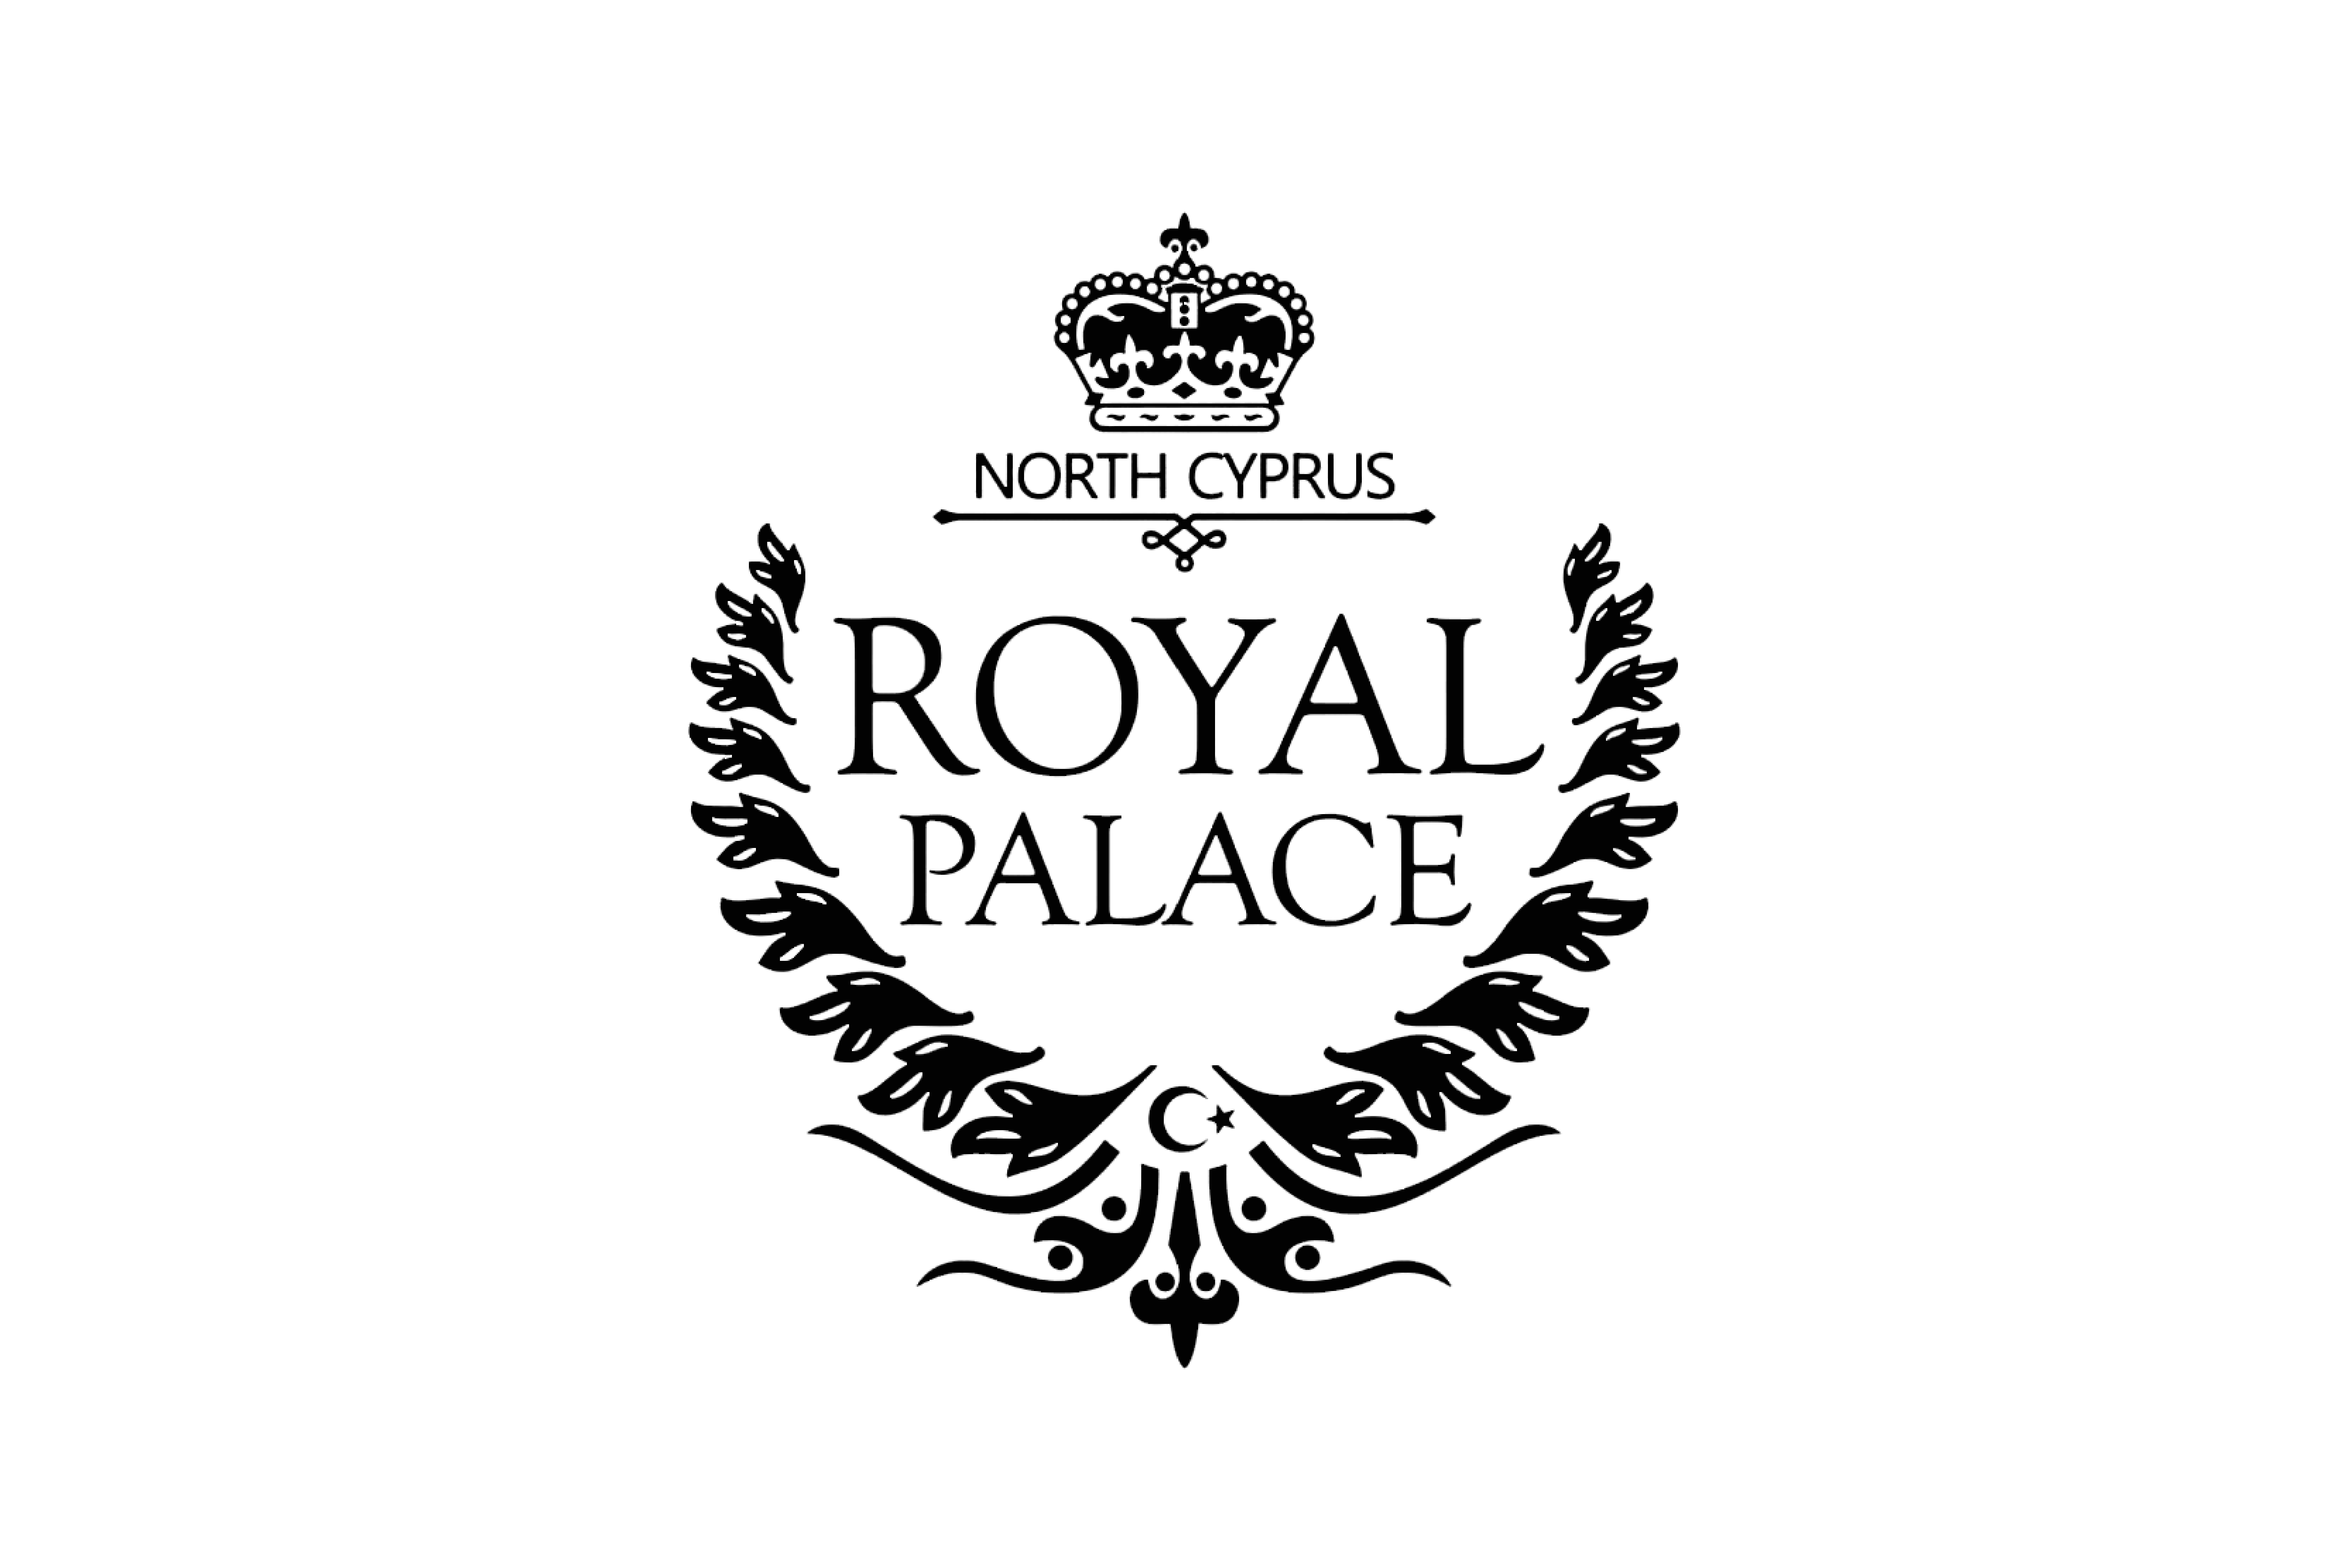 Royal Palace Majesty's Lounge